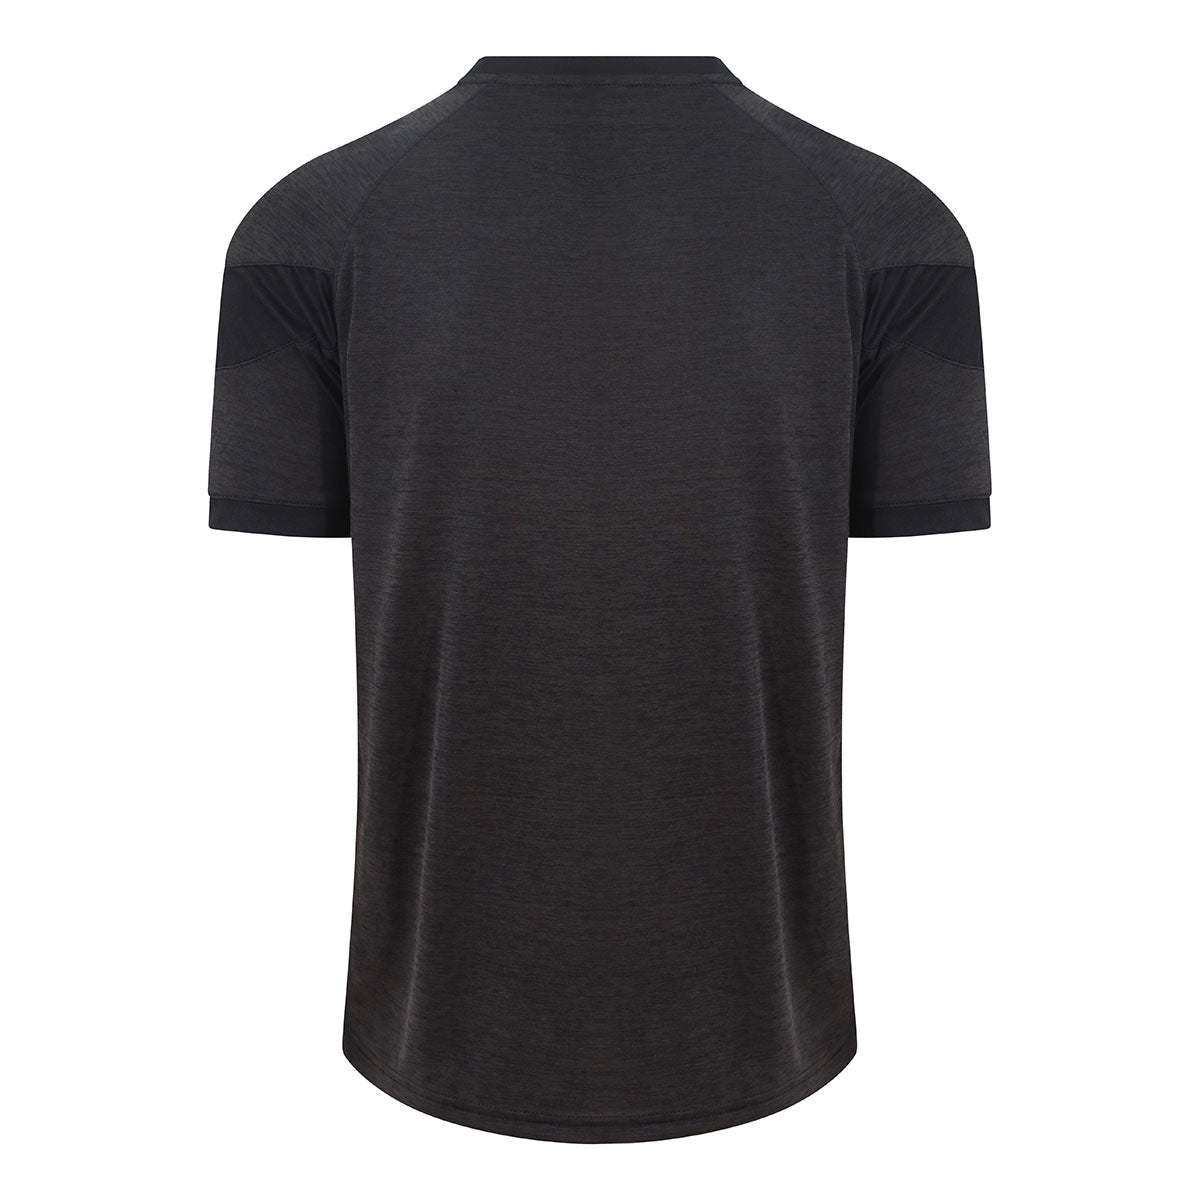 Mc Keever Kilmeena GAA Core 22 T-Shirt - Adult - Black